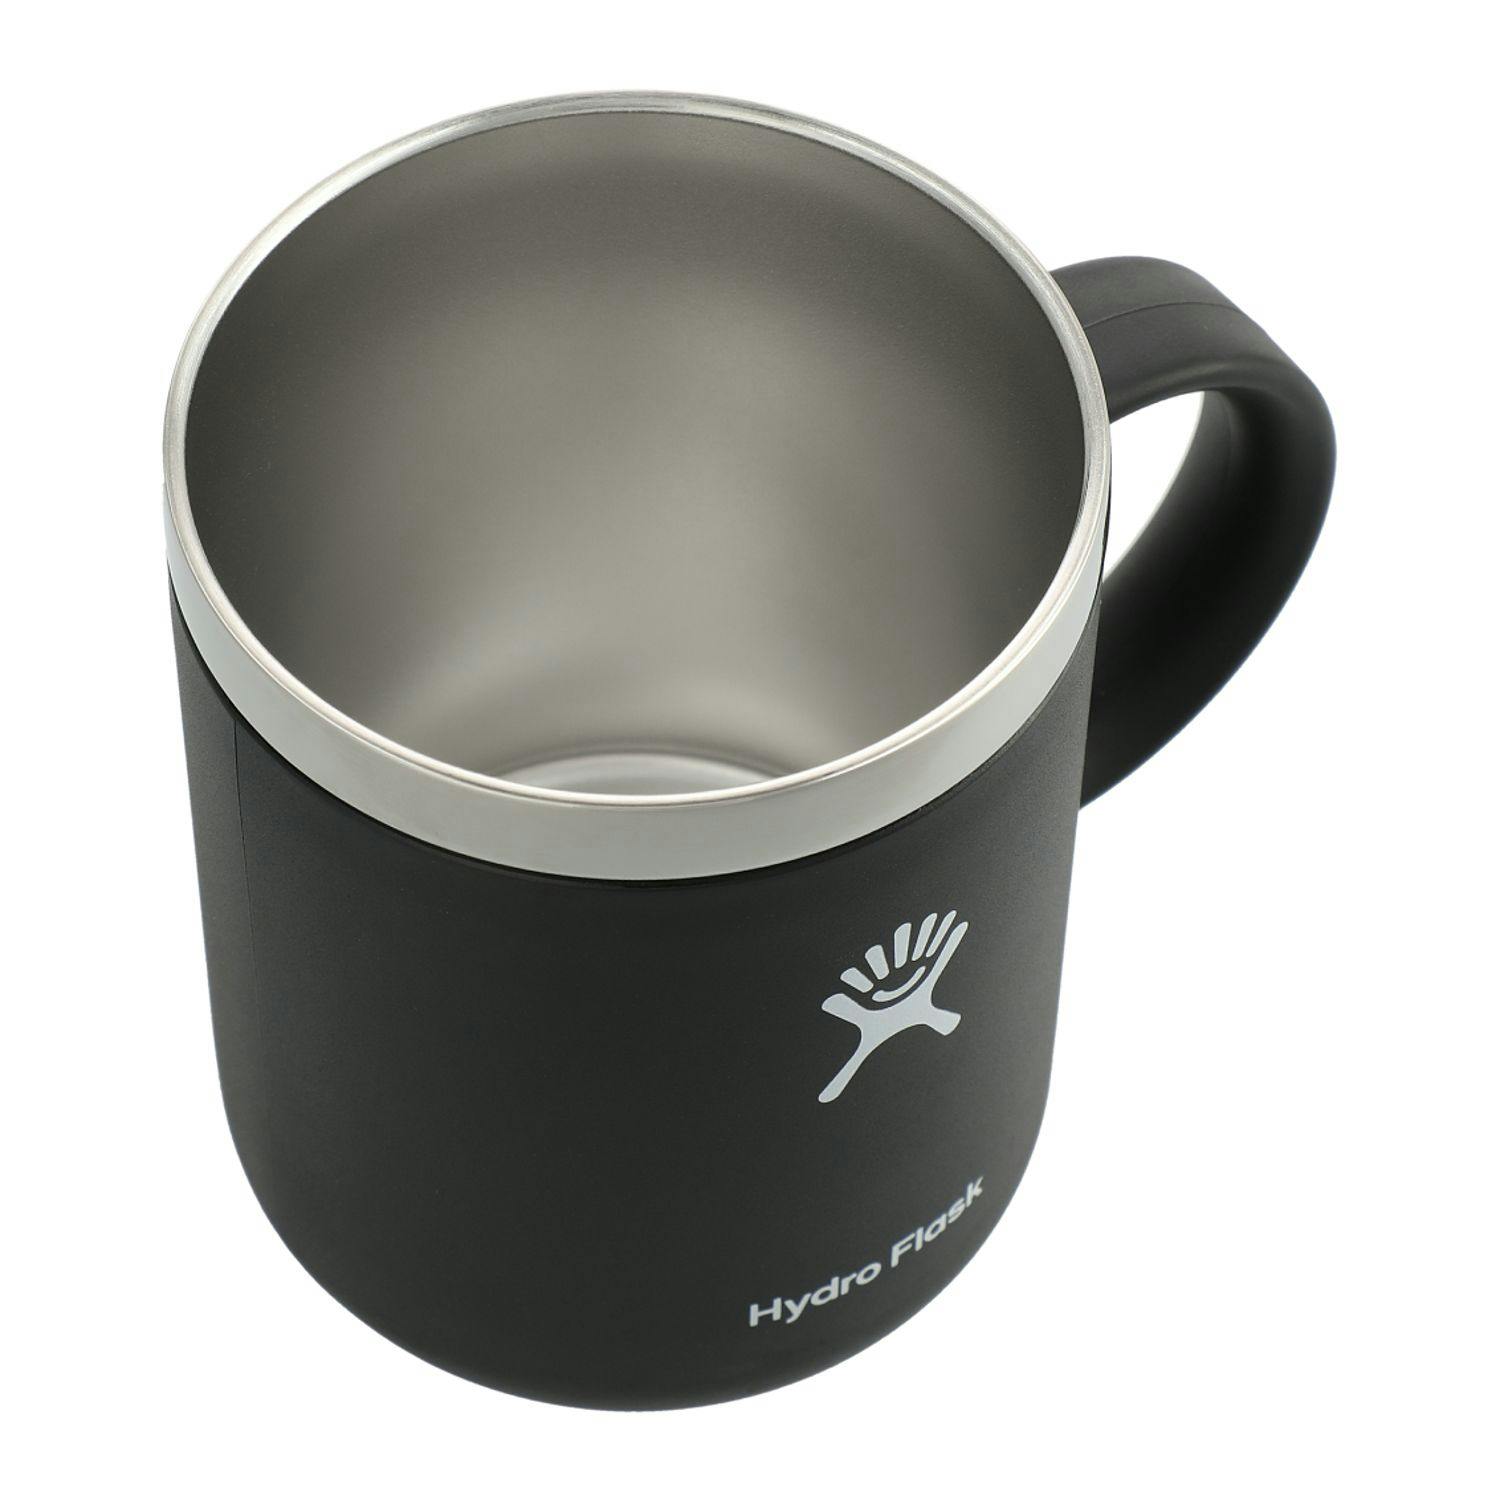 Branded Hydro Flask Coffee Mug